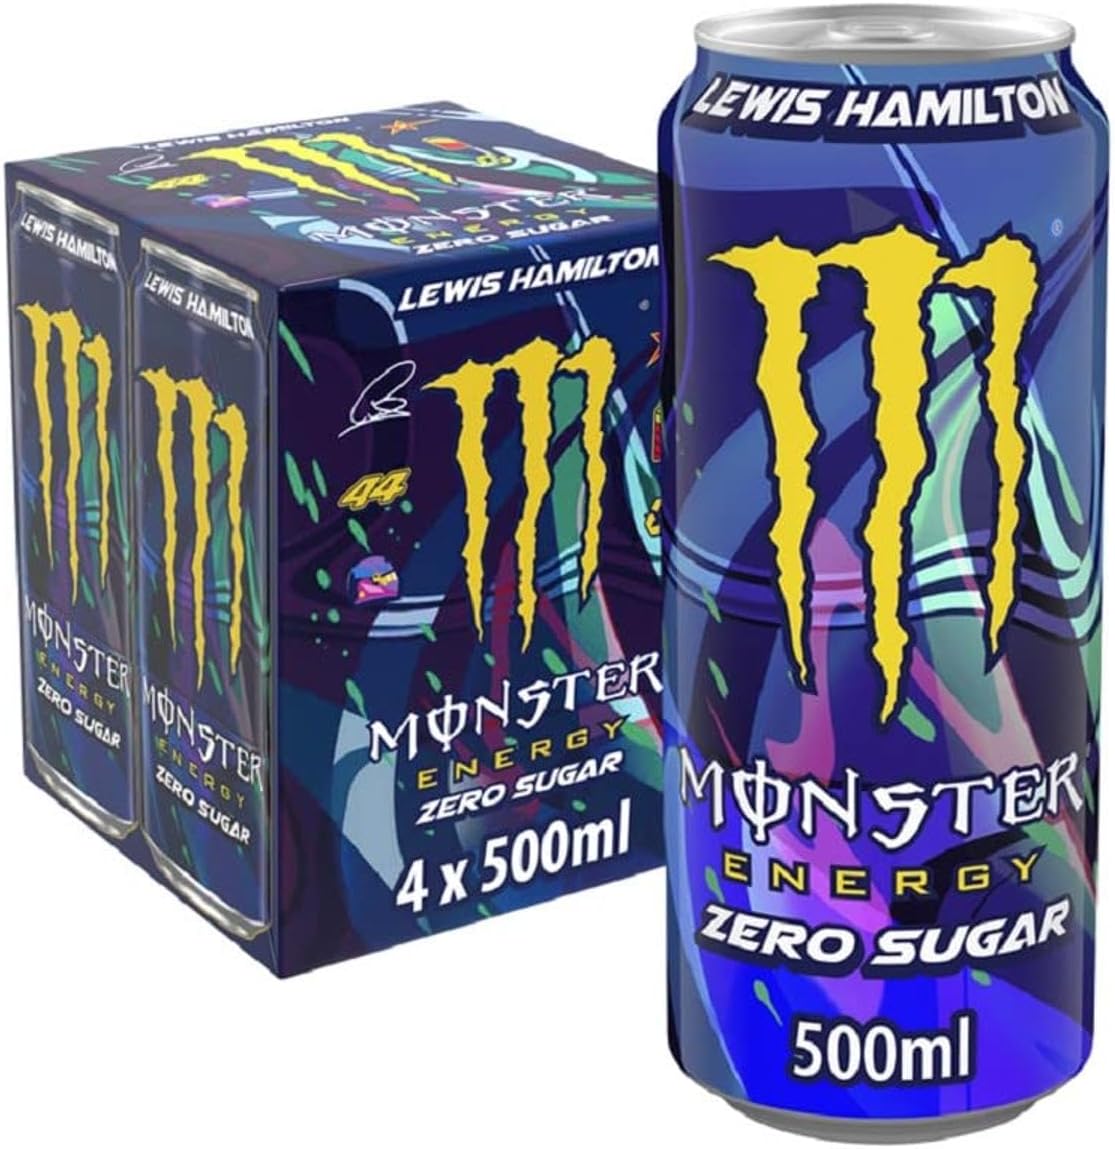 Monster Energy Drink Lewis Hamilton 500ml - Pack of 4